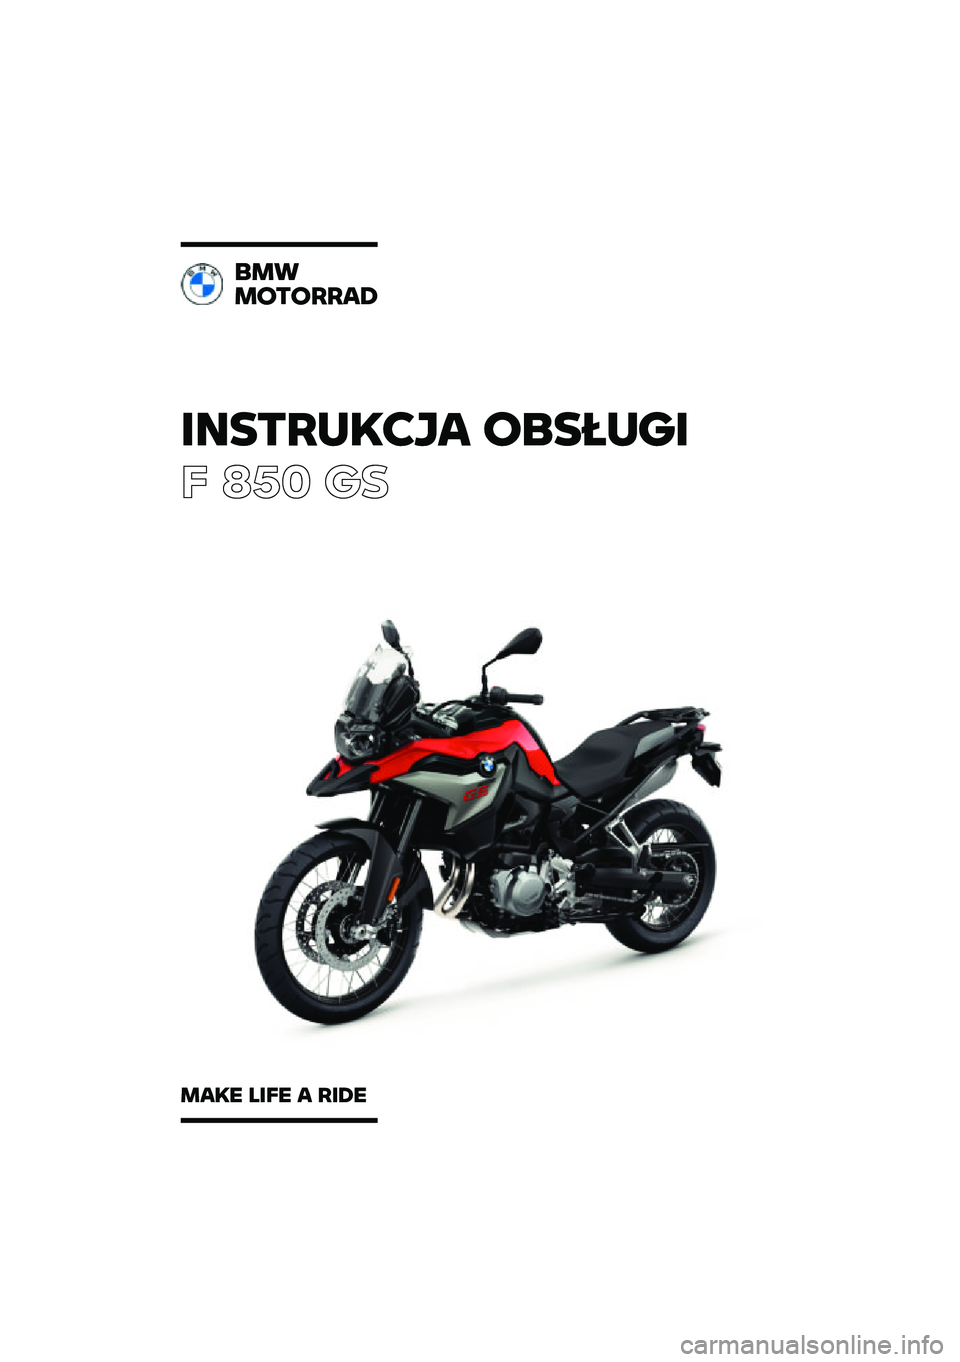 BMW MOTORRAD F 850 GS 2021  Instrukcja obsługi (in Polish) �������\b�	�
� �\f�
�����
� ��� �	�

�
��
��\f��\f����
���\b� ���� � ���� 